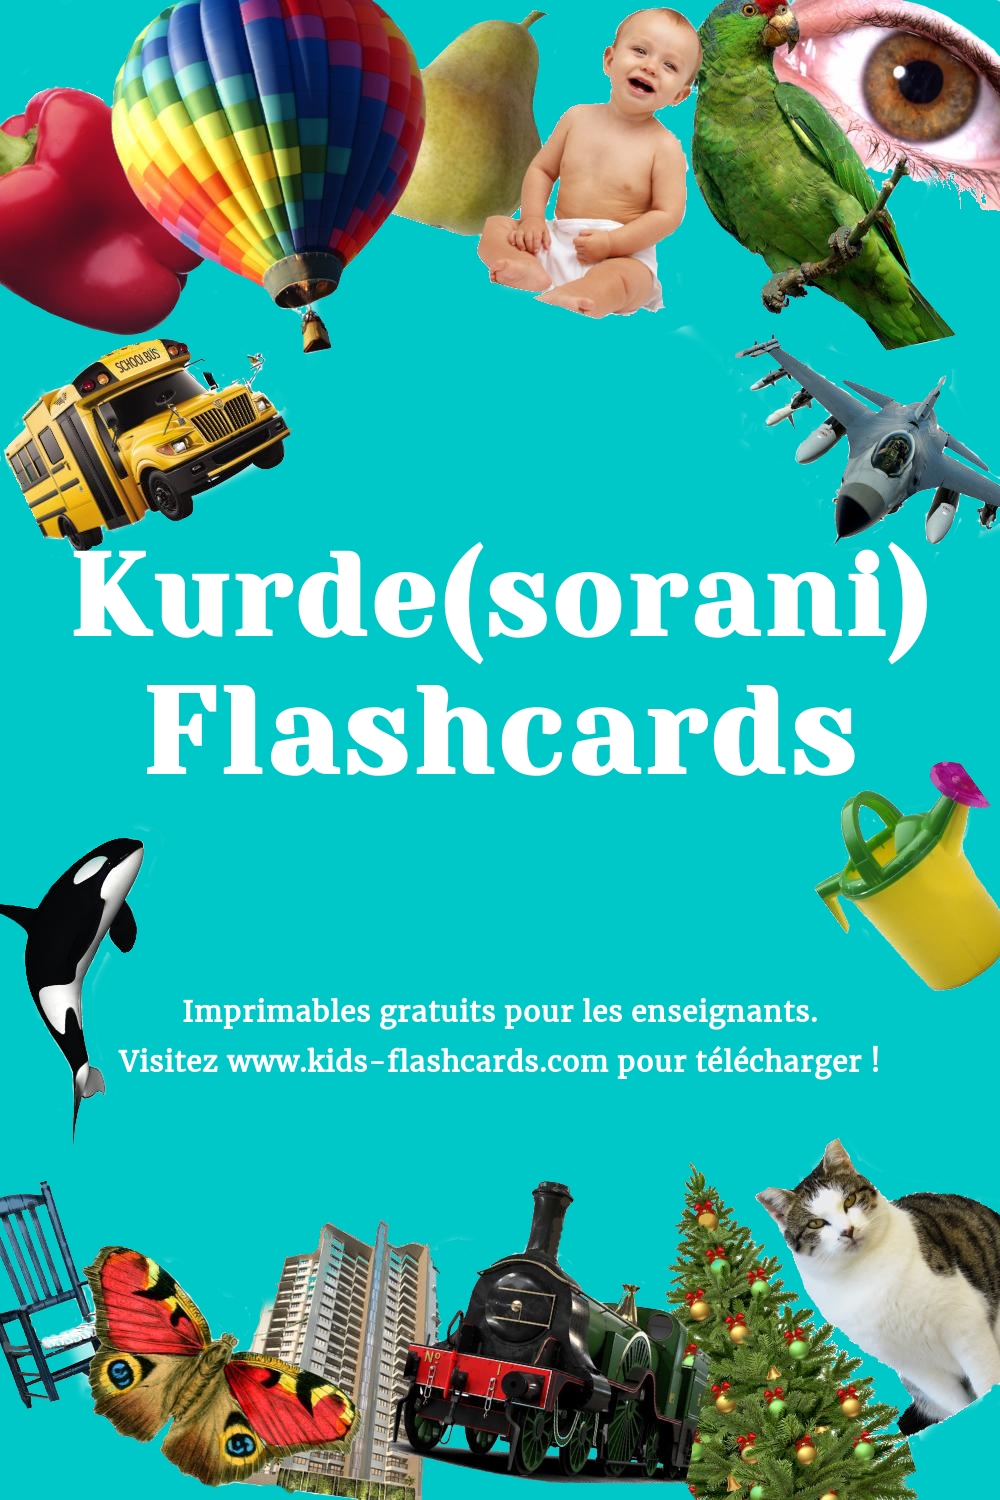 Imprimables gratuits en Kurde(sorani)